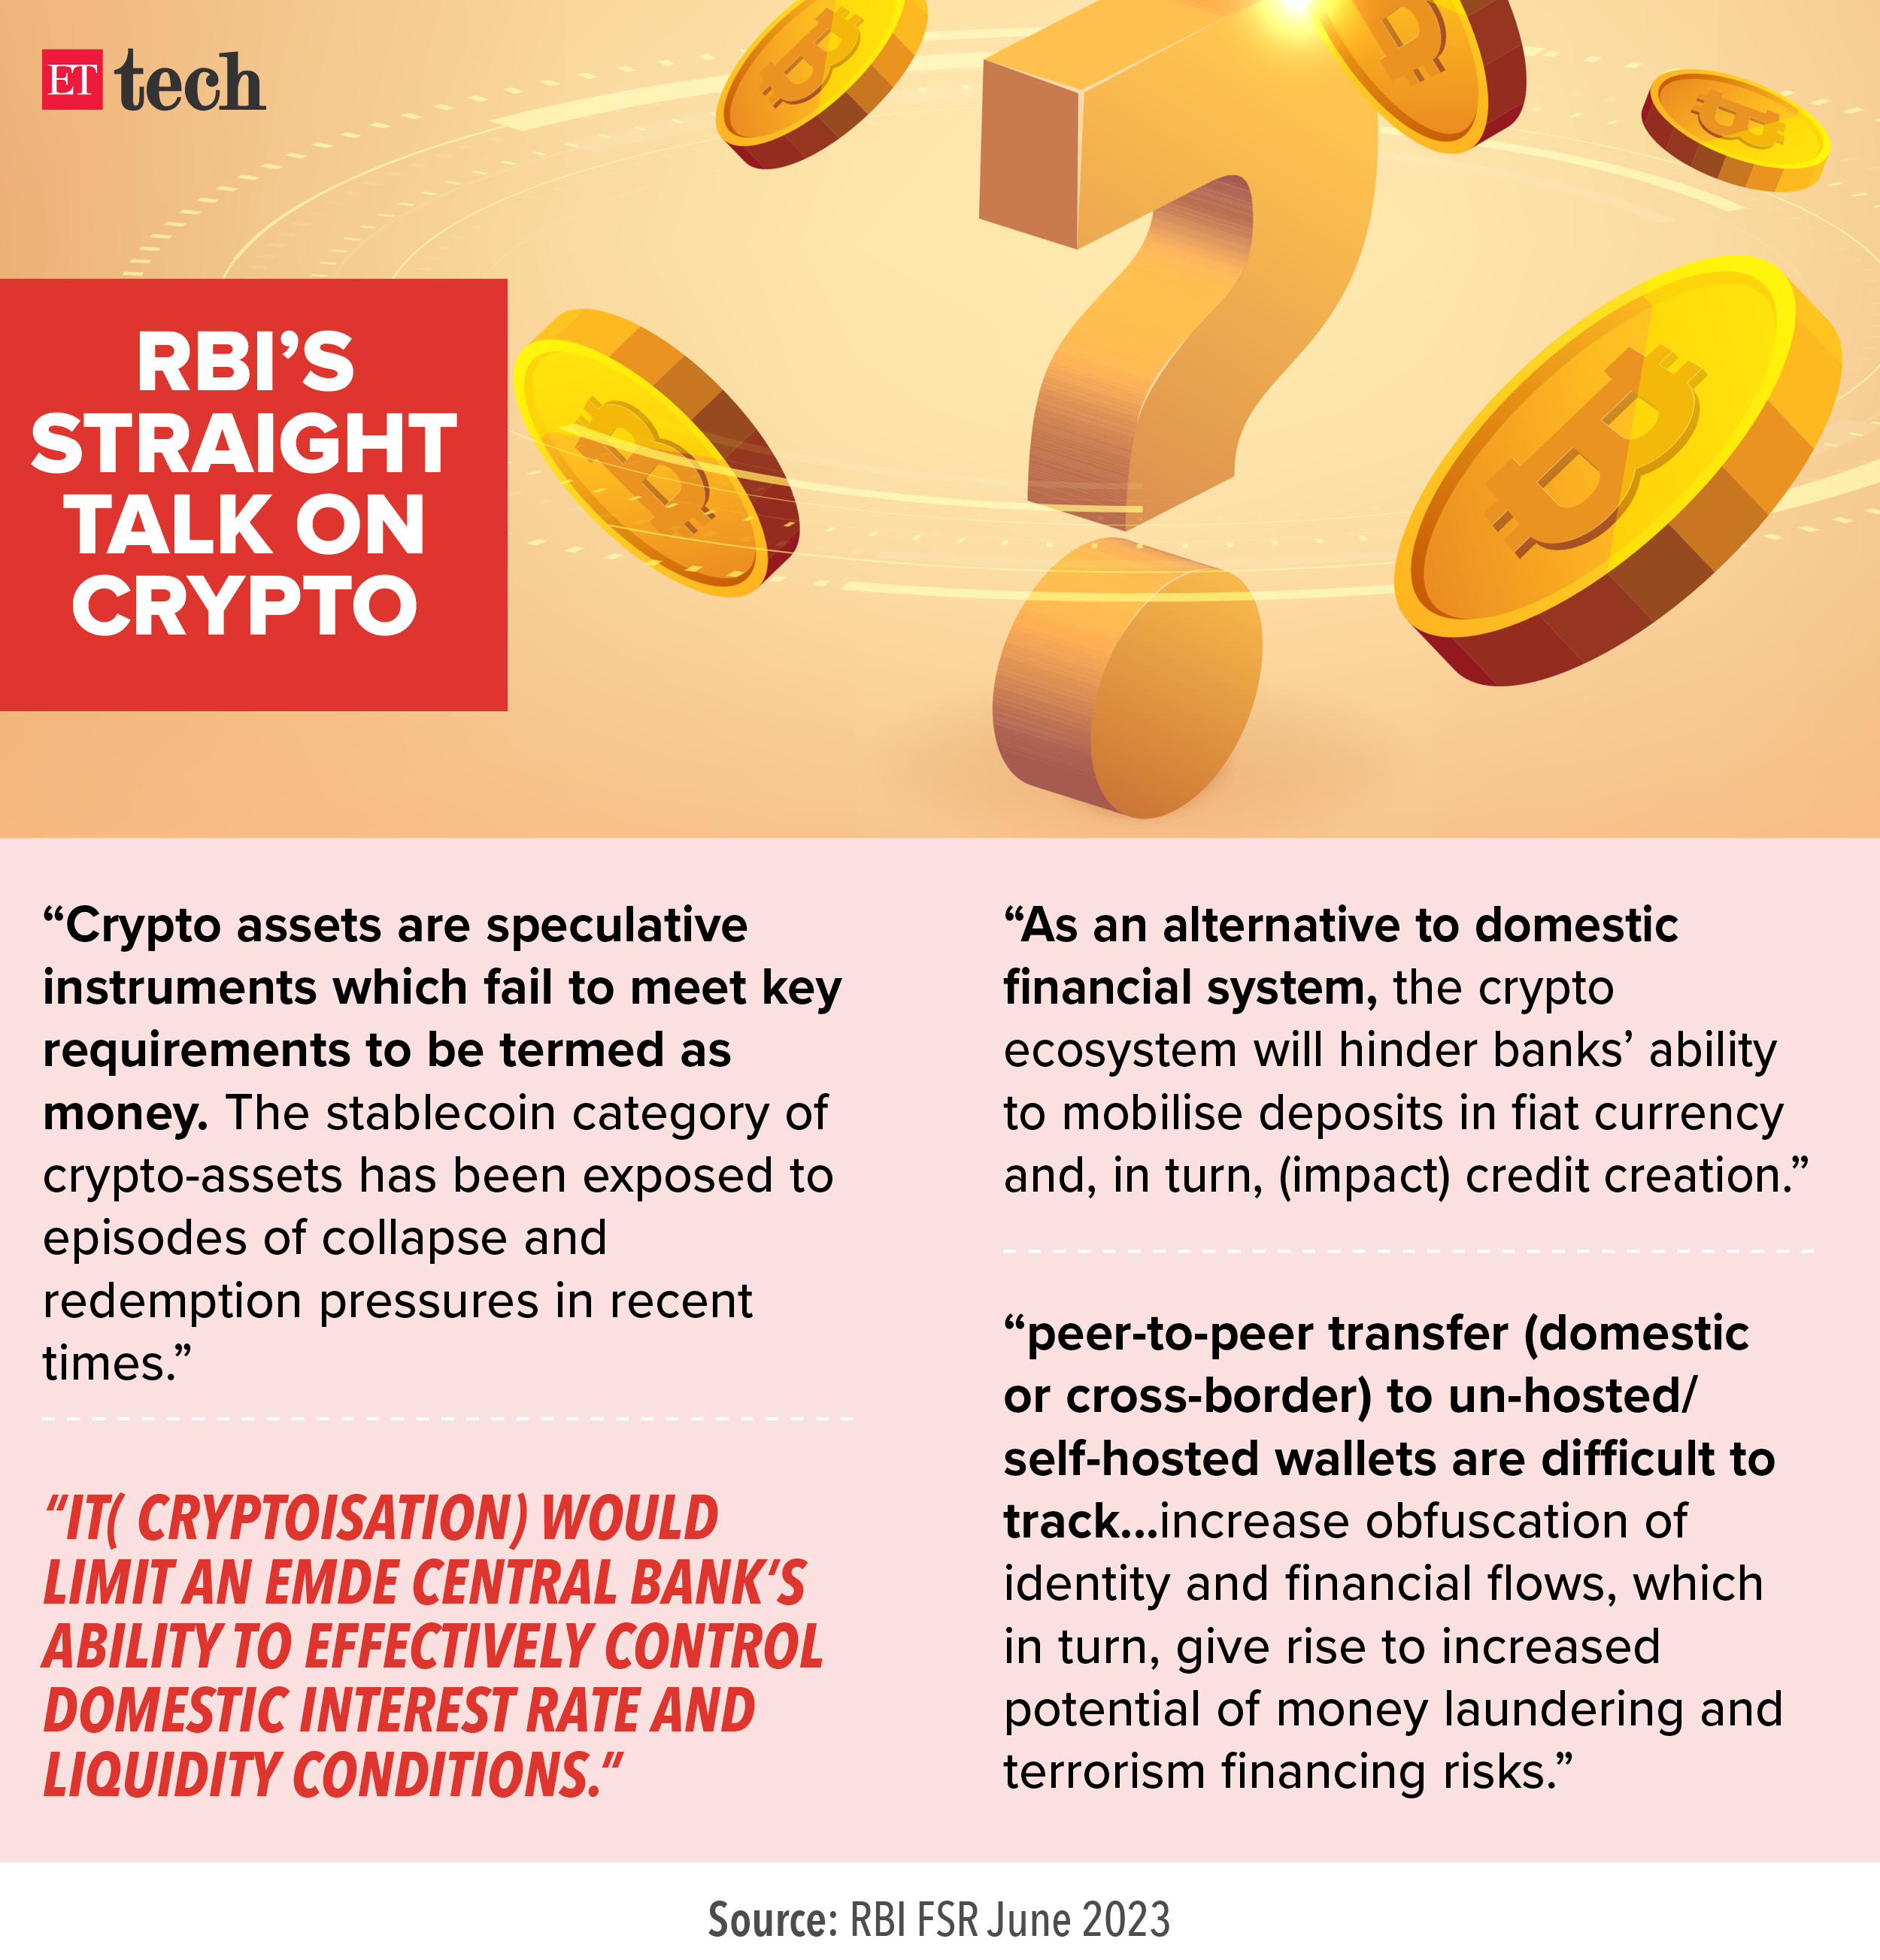 RBI Straight Talk on Crypto_Graphic_ETTECH